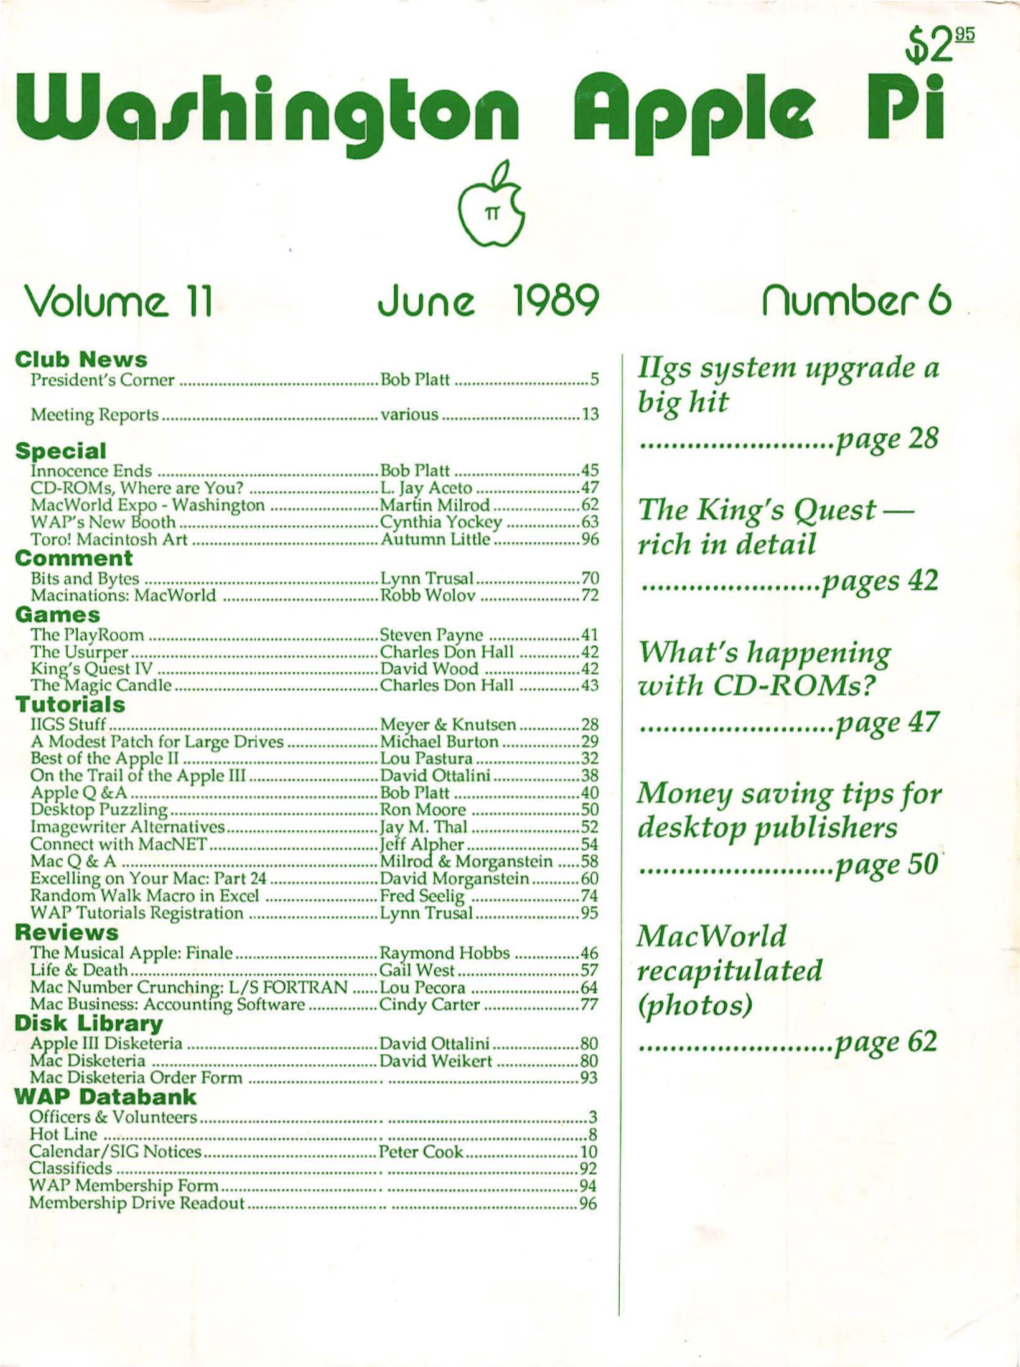 Washington Apple Pi Journal, June 1989